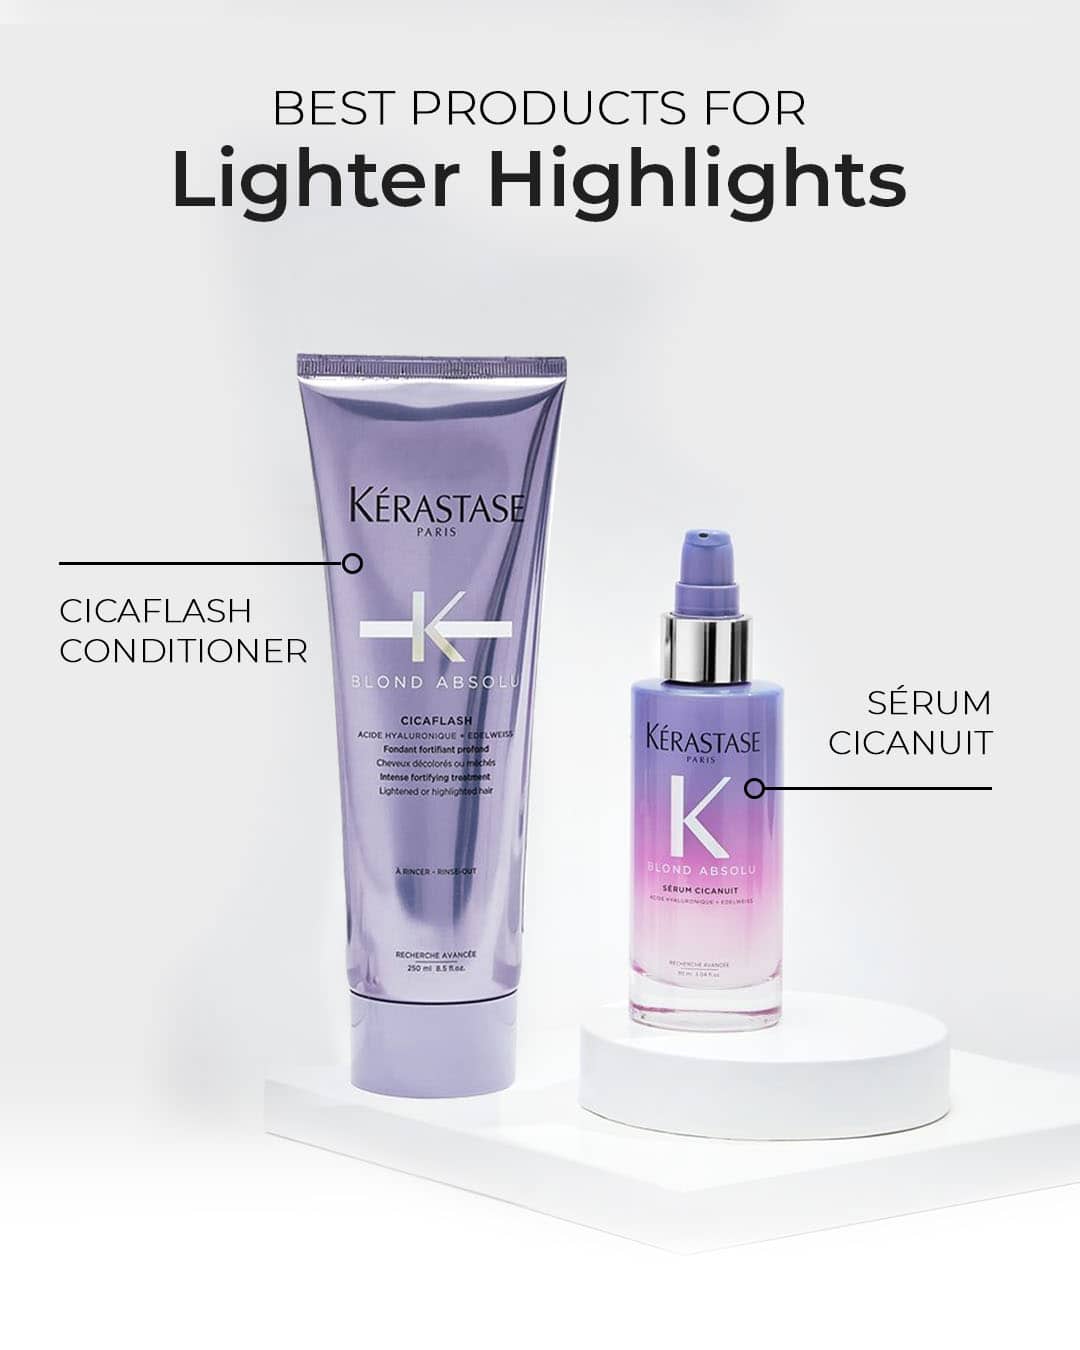 Kerastase's Blond Absolu product for Lighter highlights hair